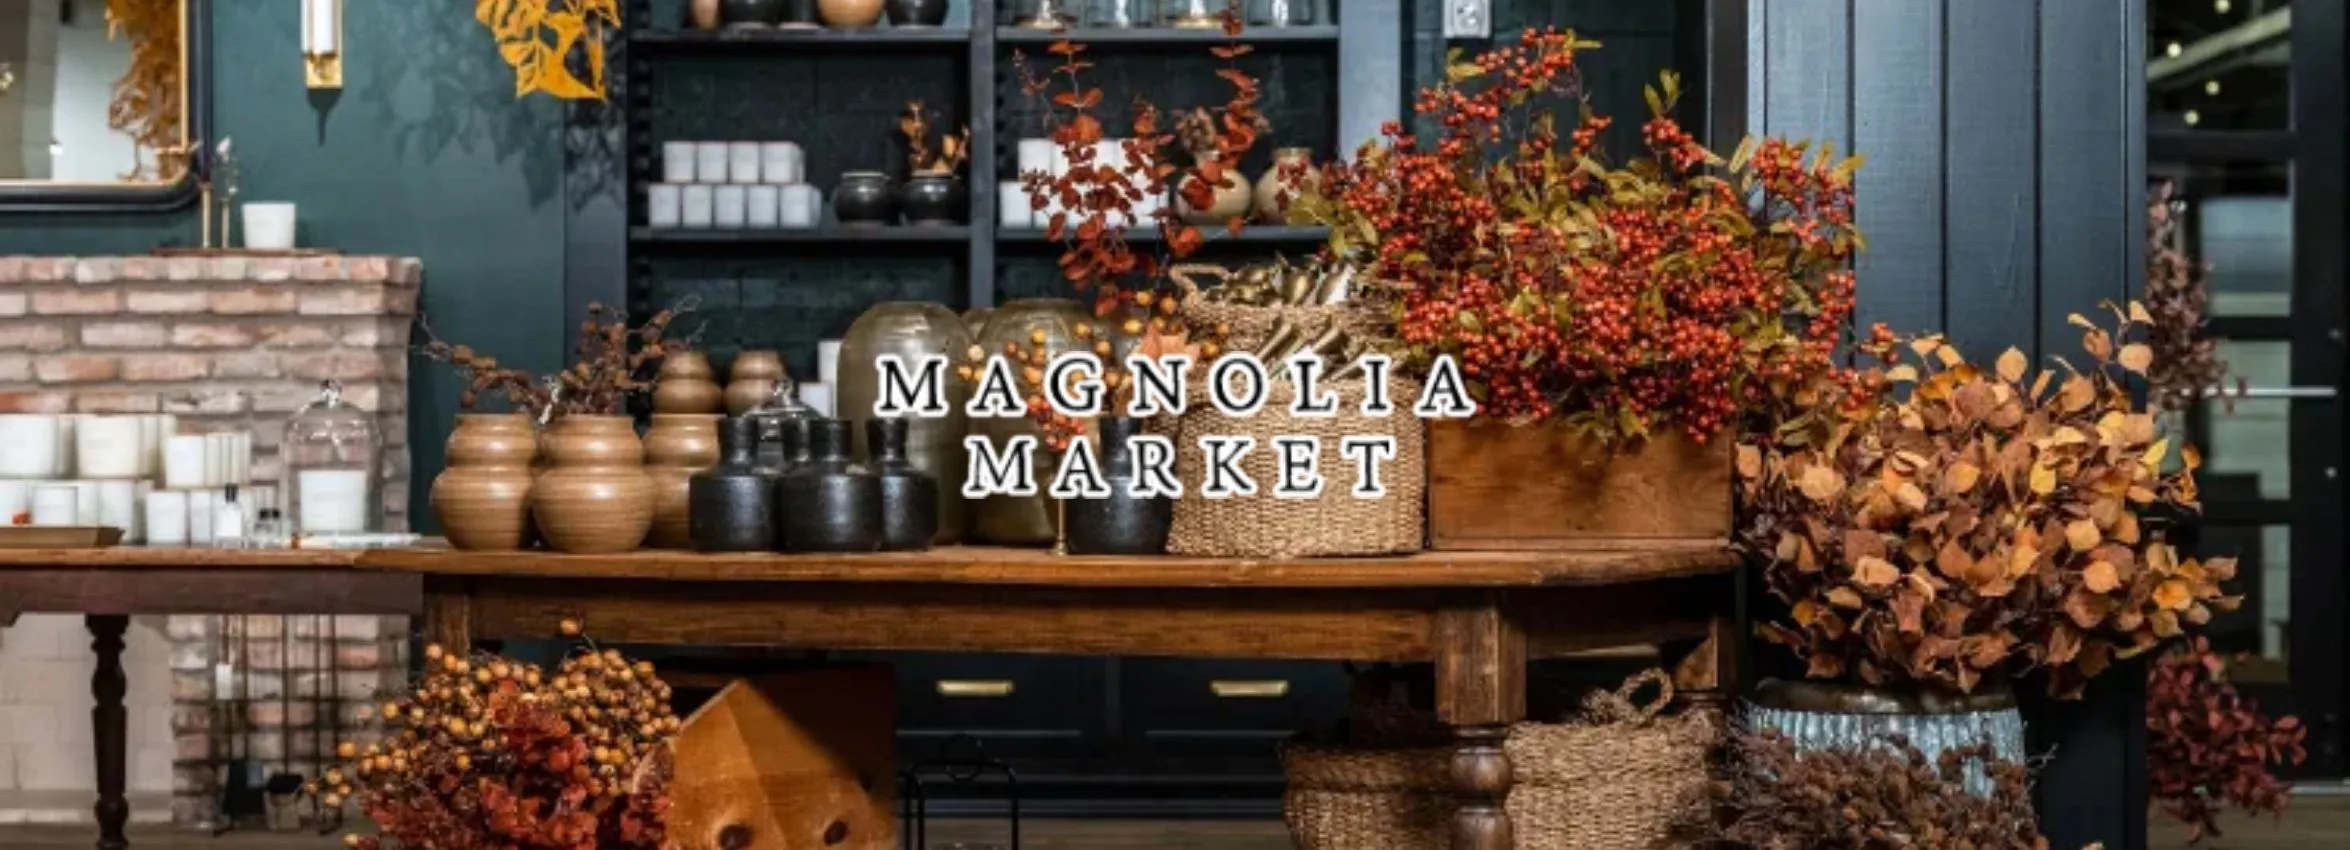 Magnolia-Market_Desktop_ET